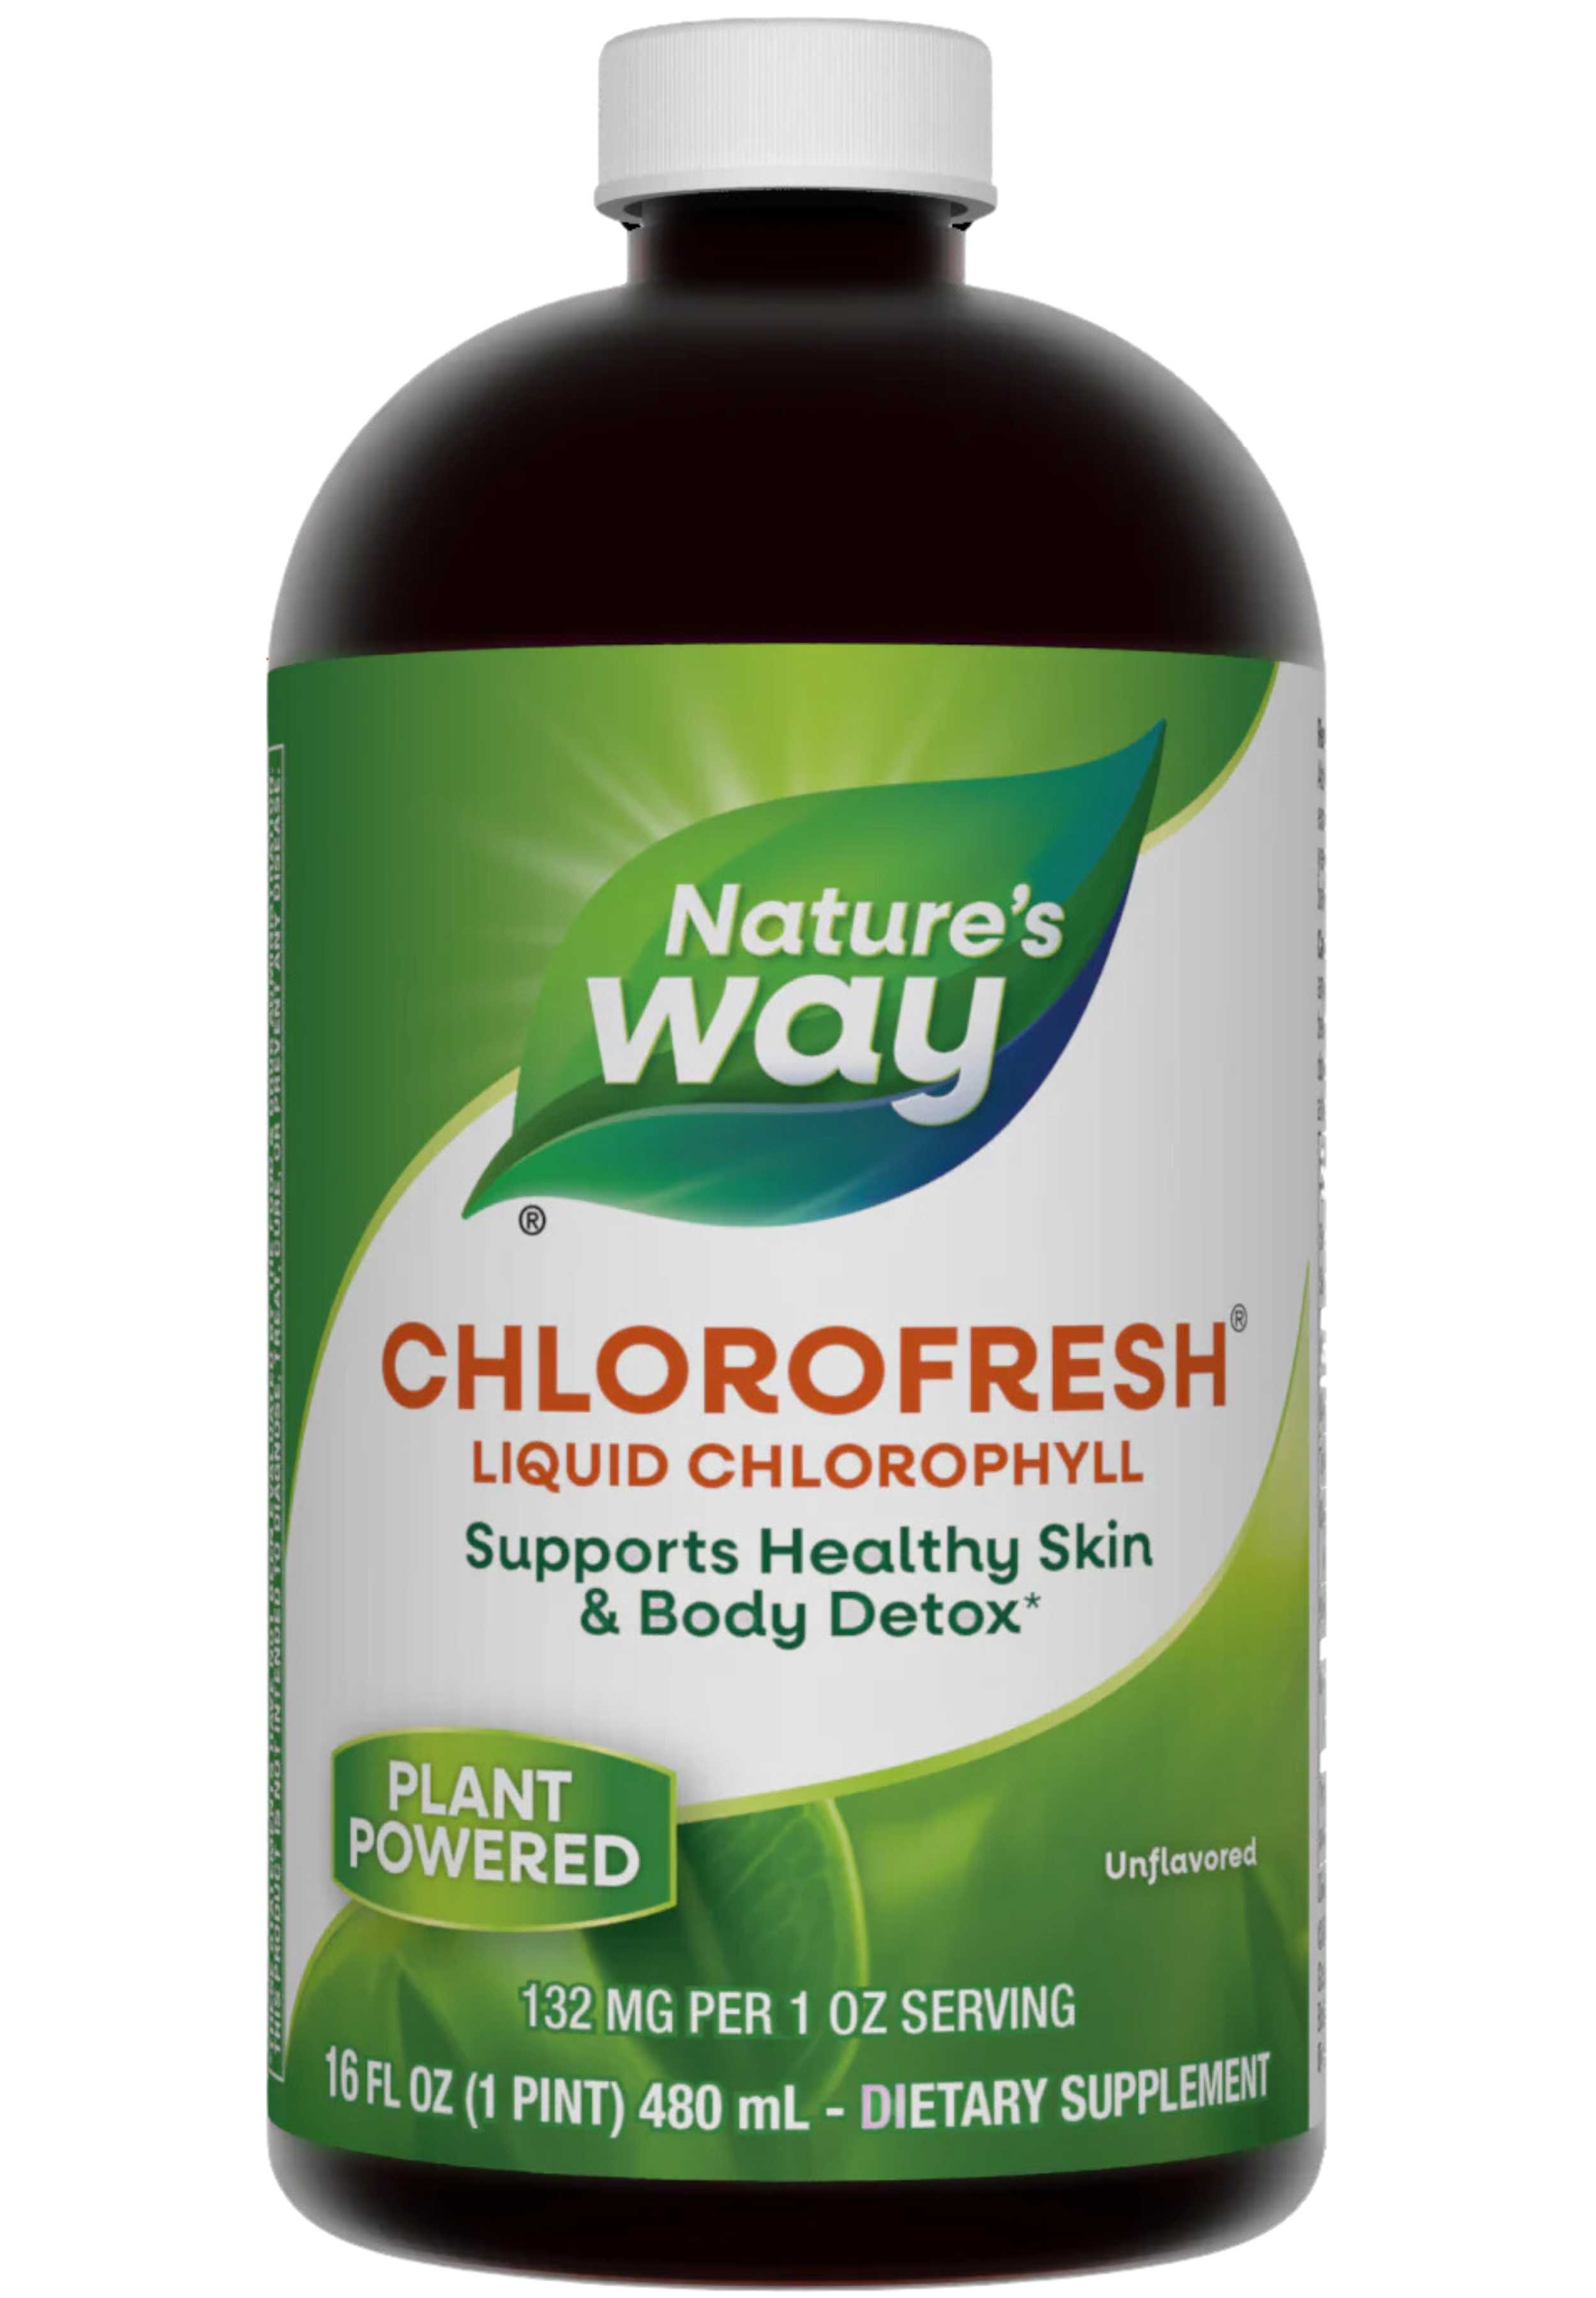 Nature's Way Chlorofresh Liquid (Unflavored)